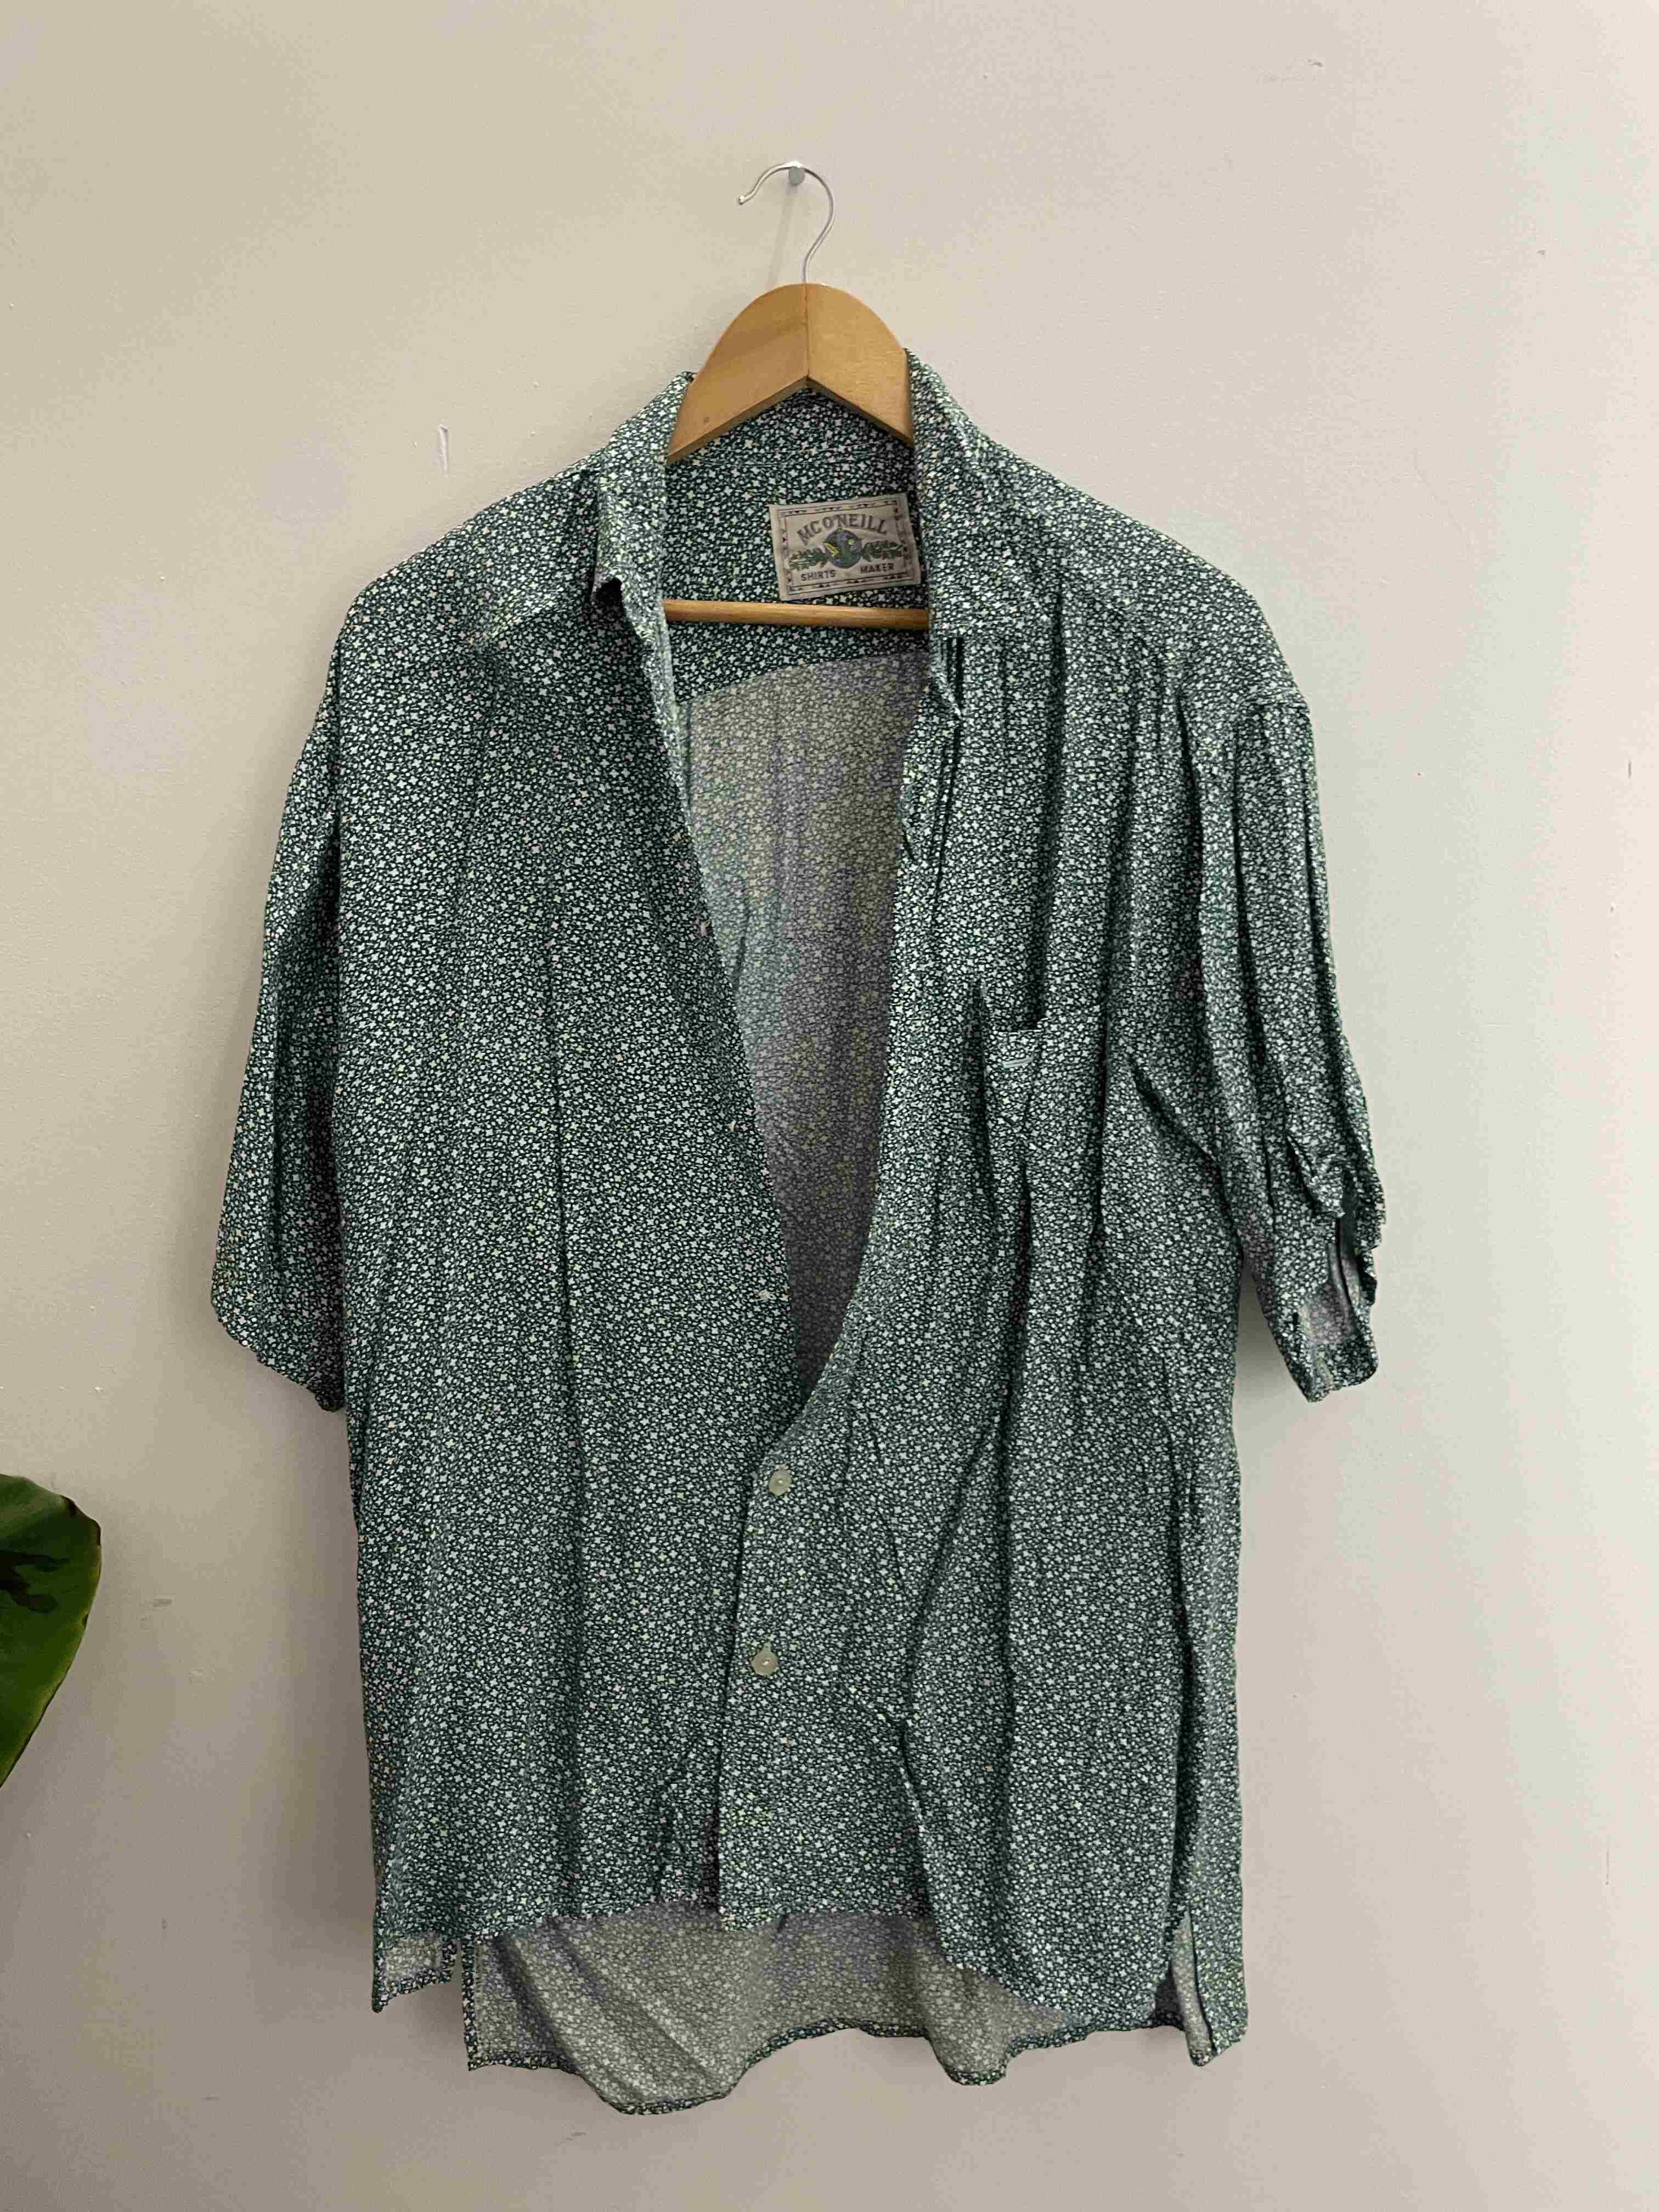 Vintage MC Oneil Green printed pattern mens shirt size M